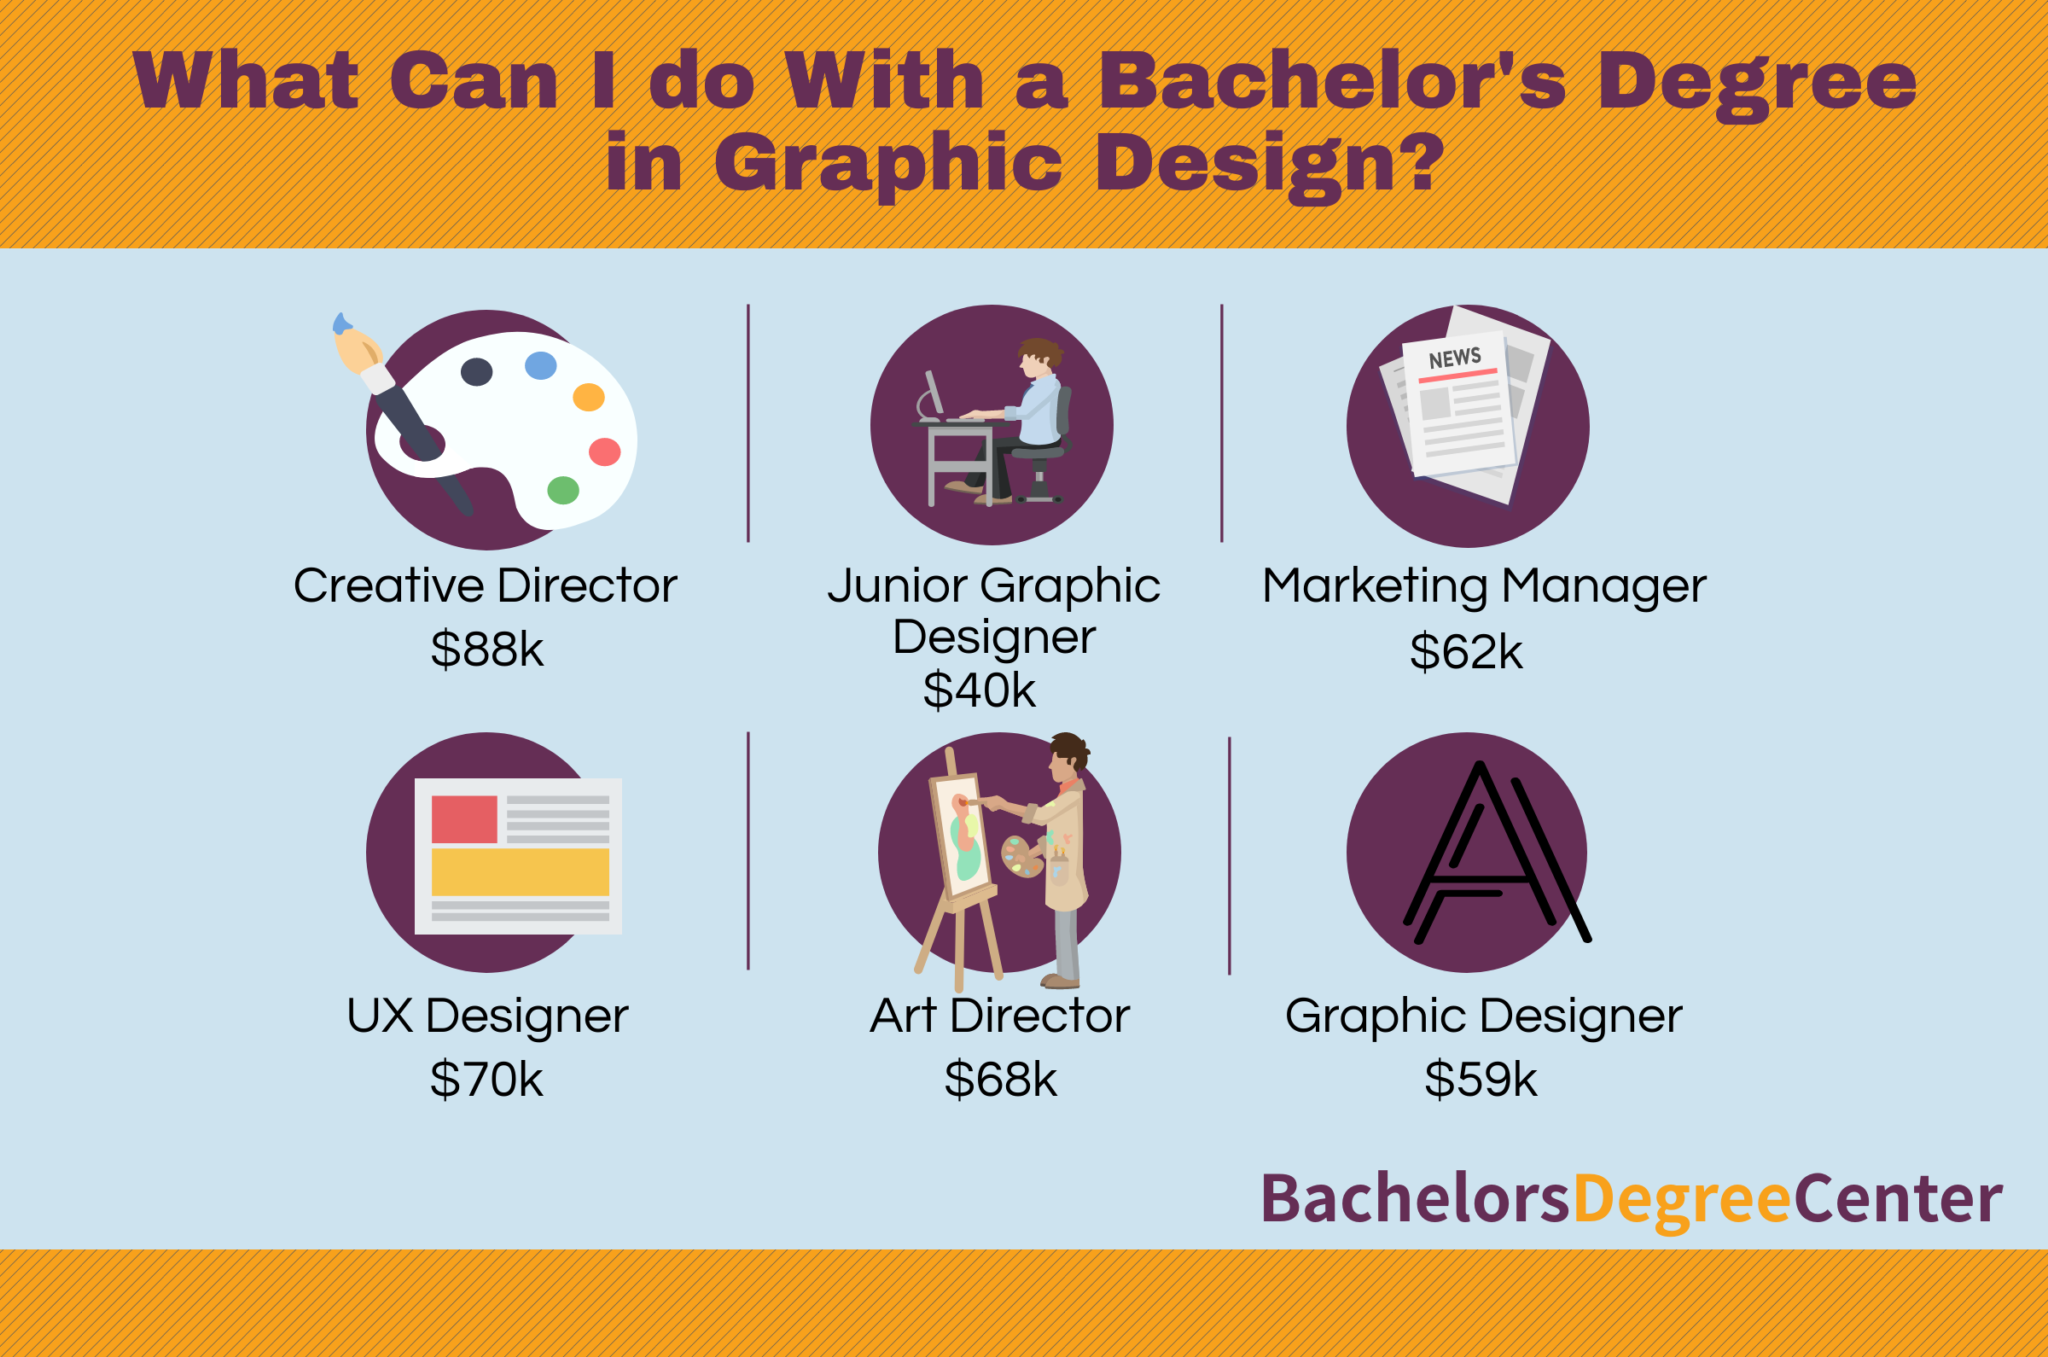 bdc-graphic-design-jobs - Bachelors Degree Center